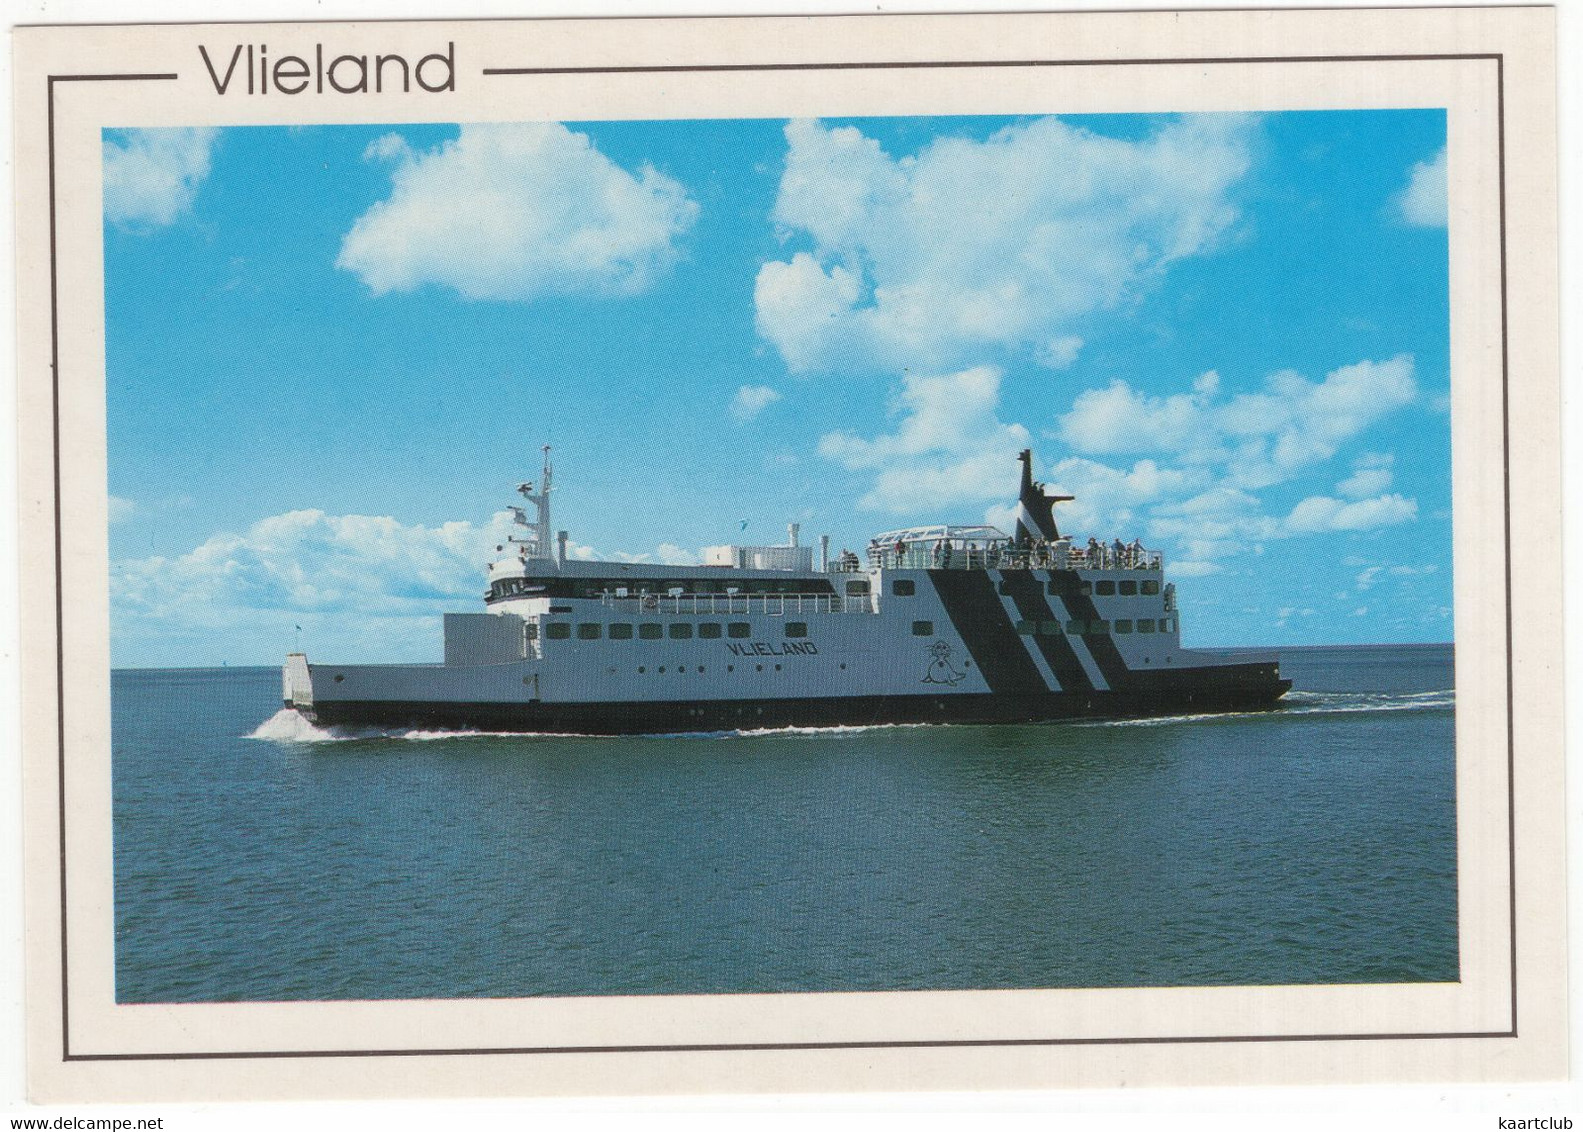 Vlieland - Veerboot 'Vlieland' - (Nederland/Holland) - VLD 34 -  Ferry / Fähre - Vlieland